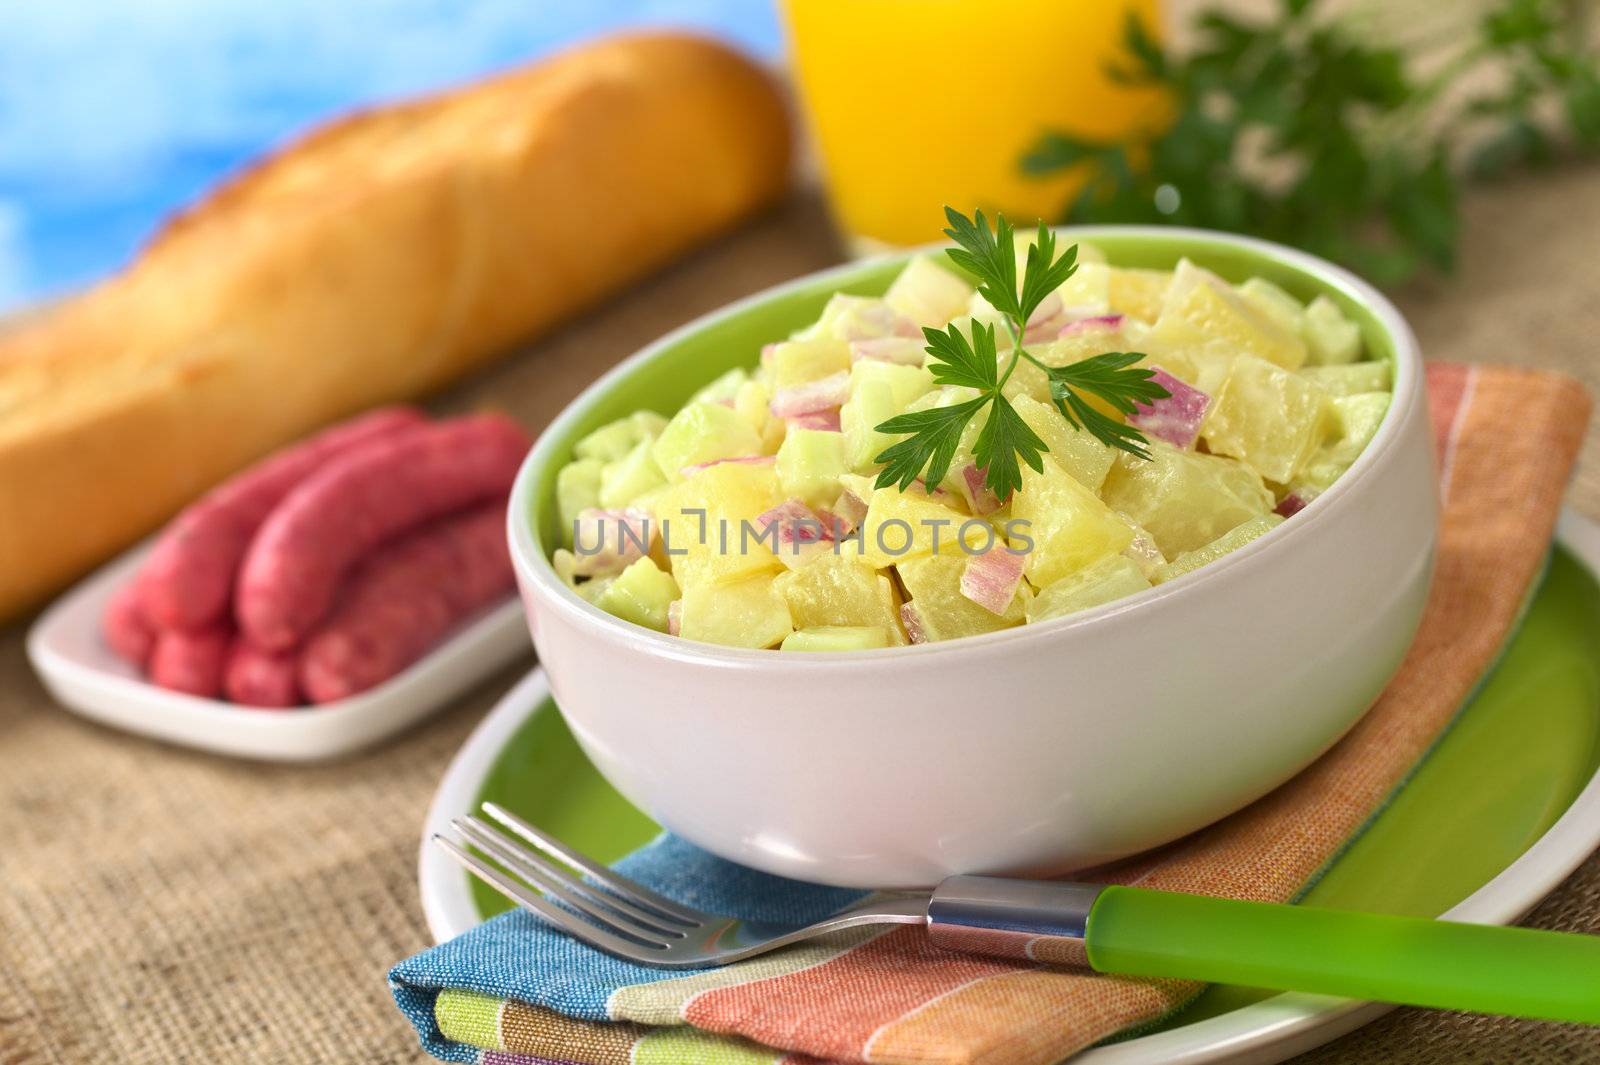 Potato Salad by ildi